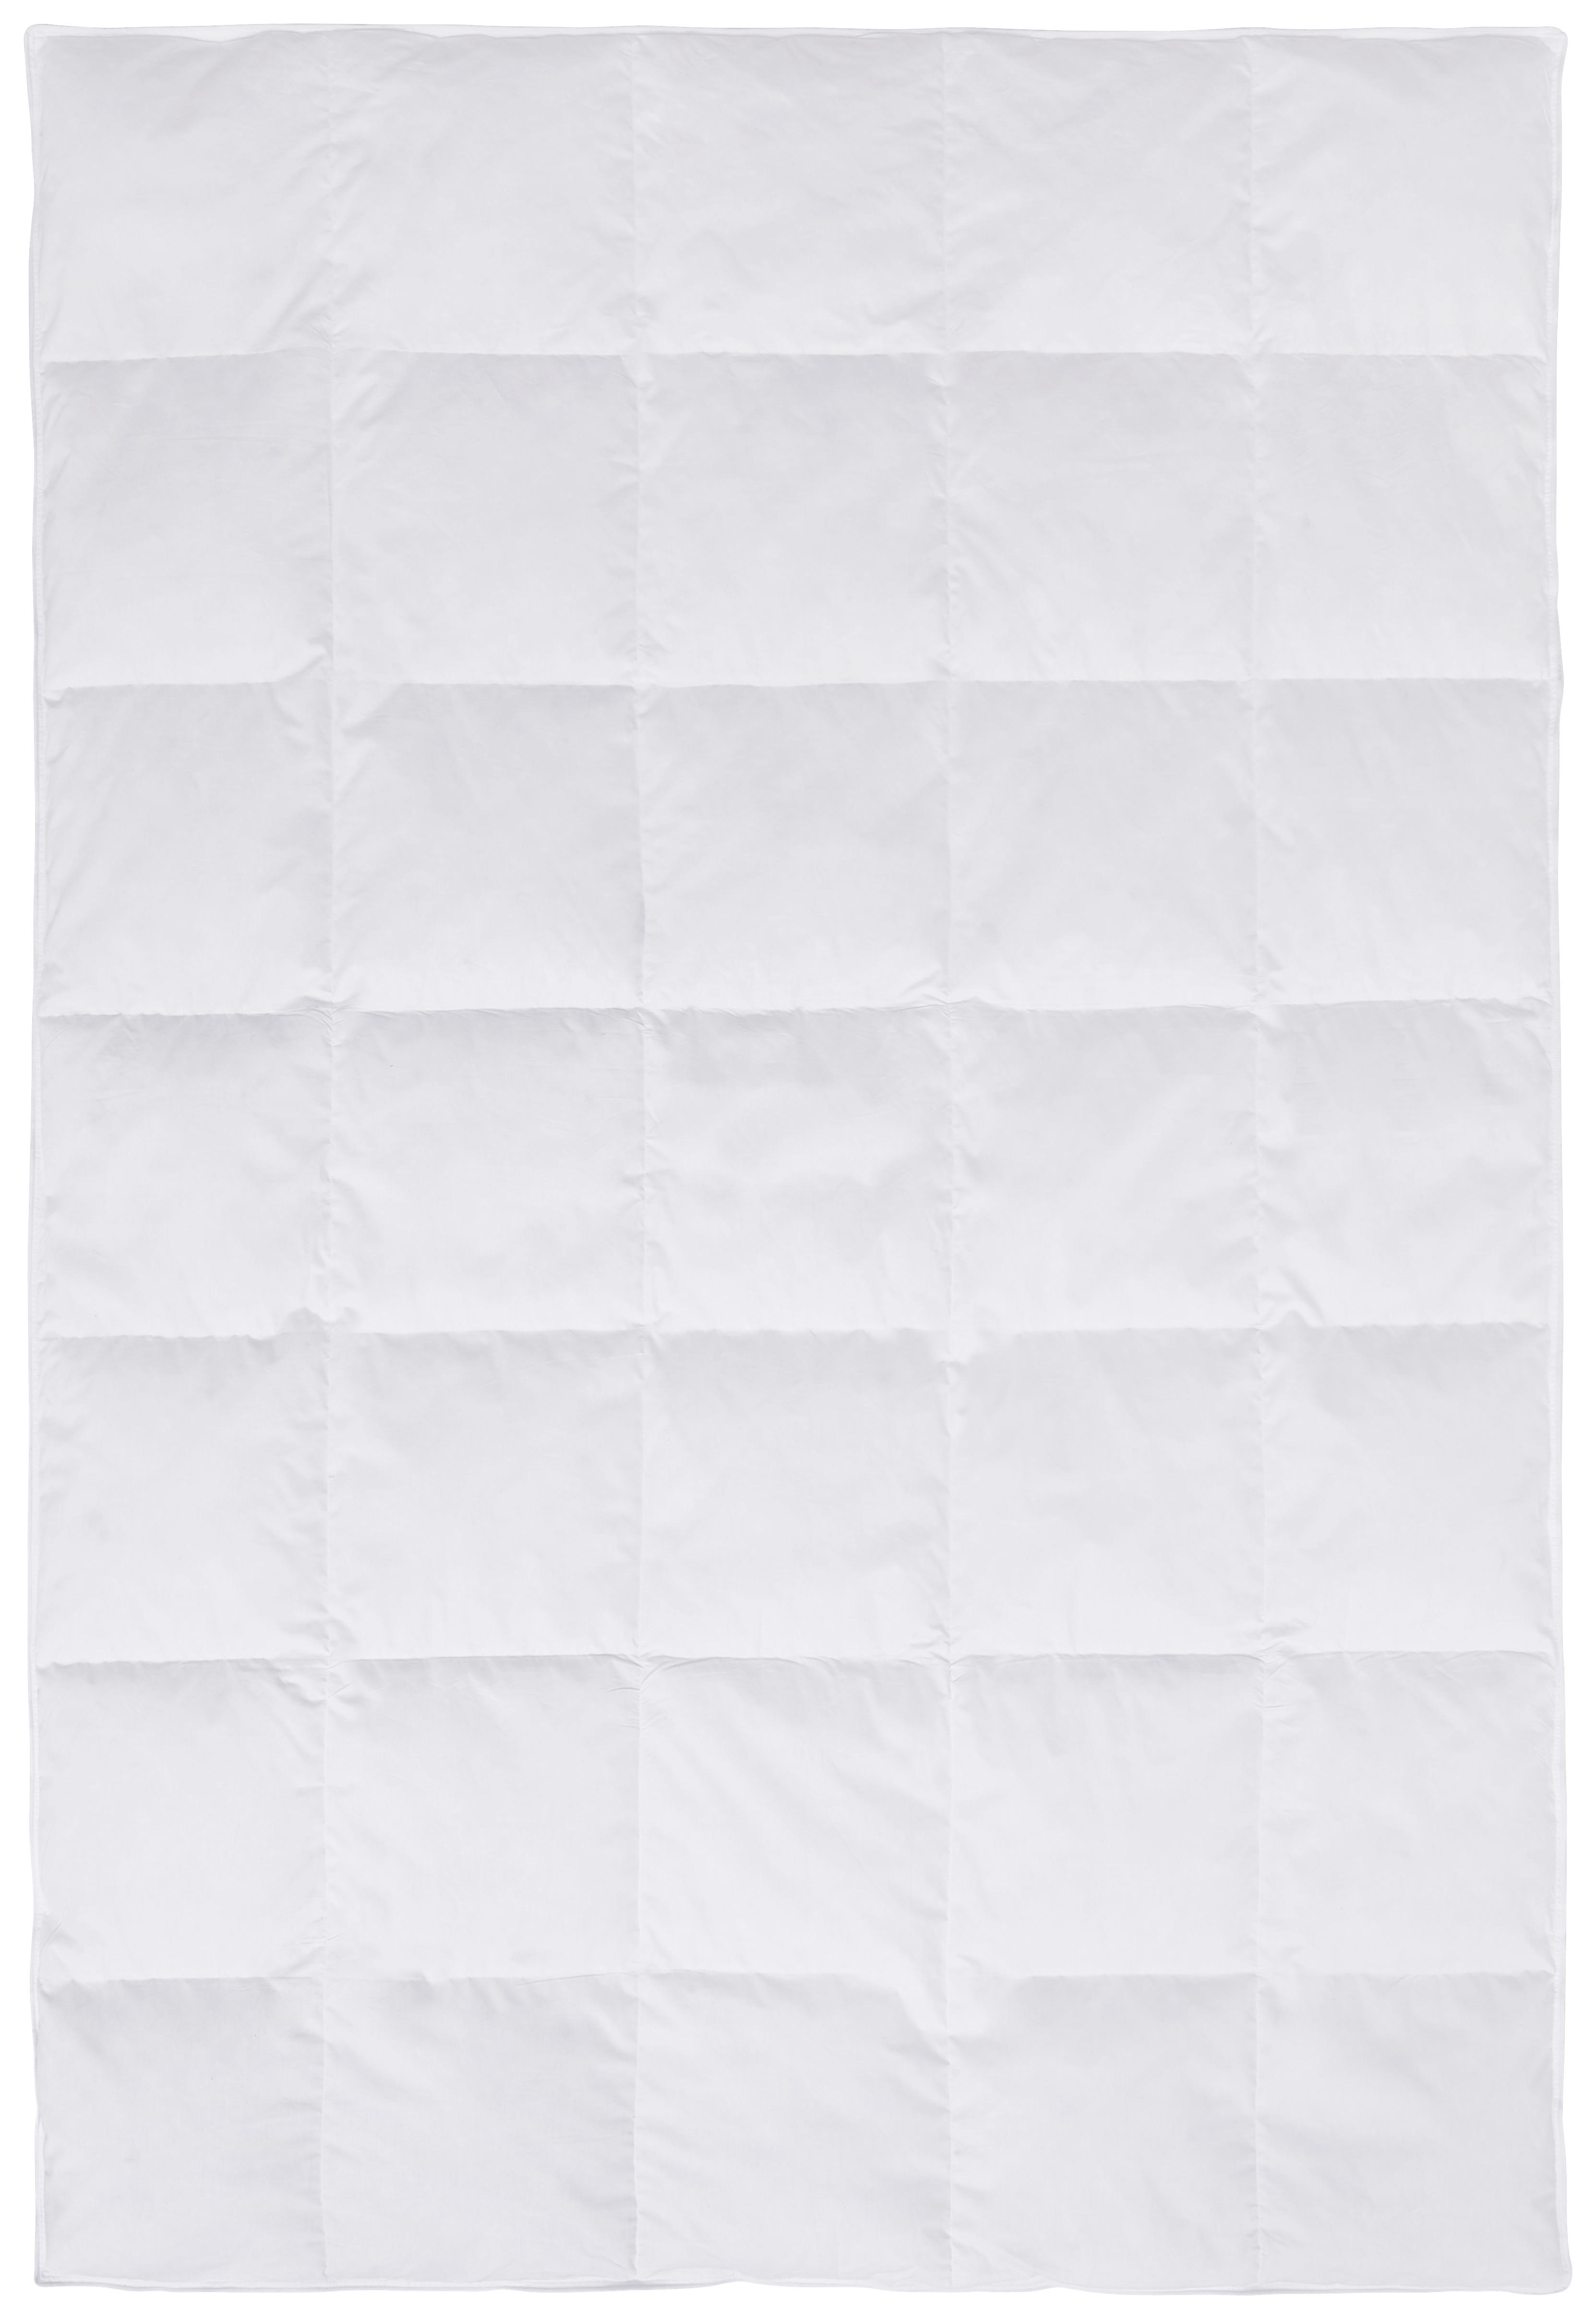 GANZJAHRESBETT  Juneau  135/200 cm   - Weiß, Basics, Textil (135/200cm) - Boxxx